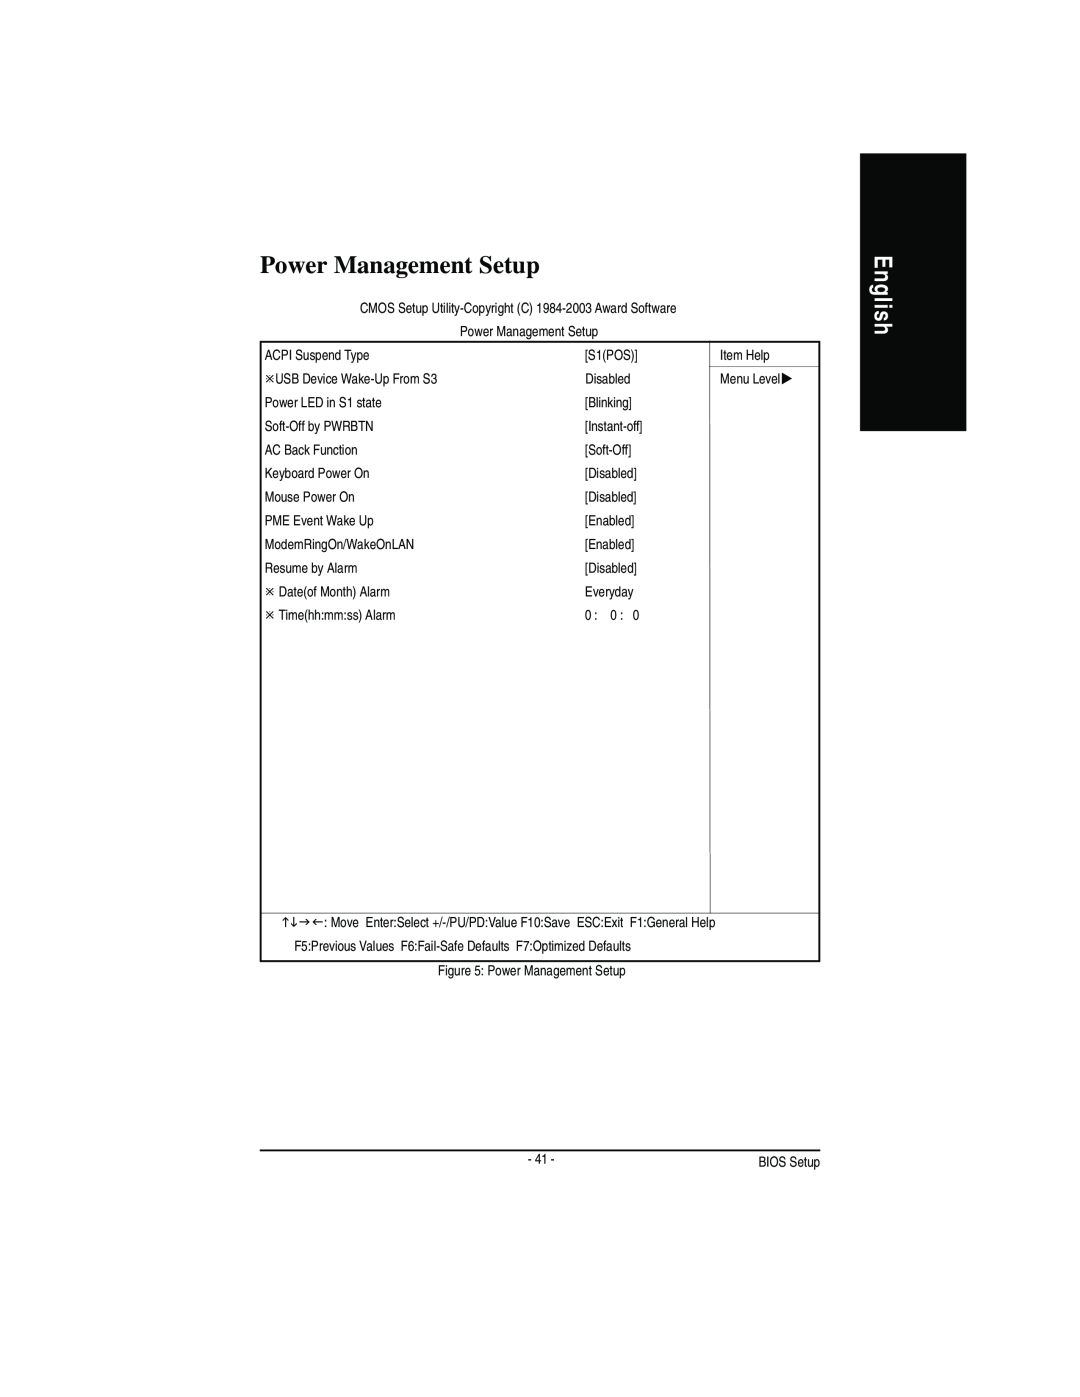 Gigabyte GA-7VA manual Power Management Setup, English 